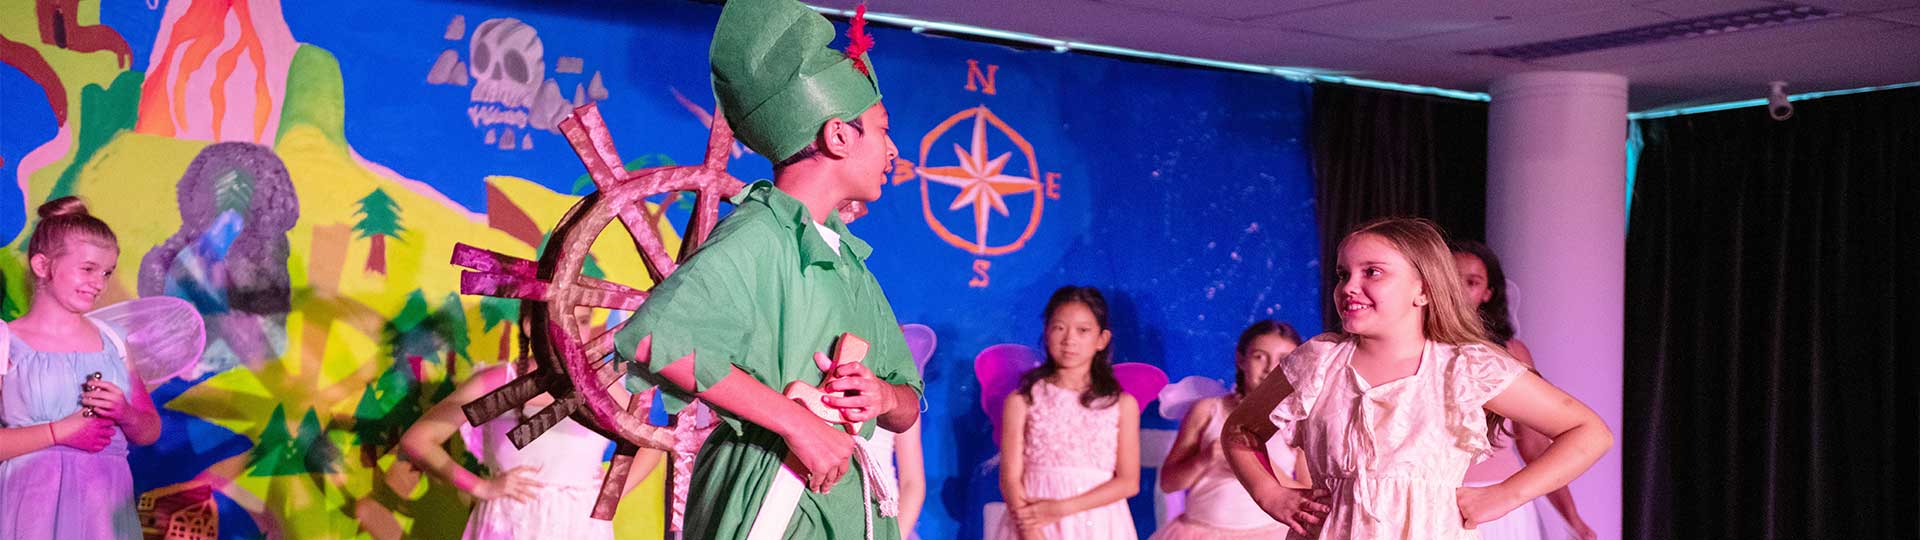 Primary Students performing "Peterpan" Musical Drama